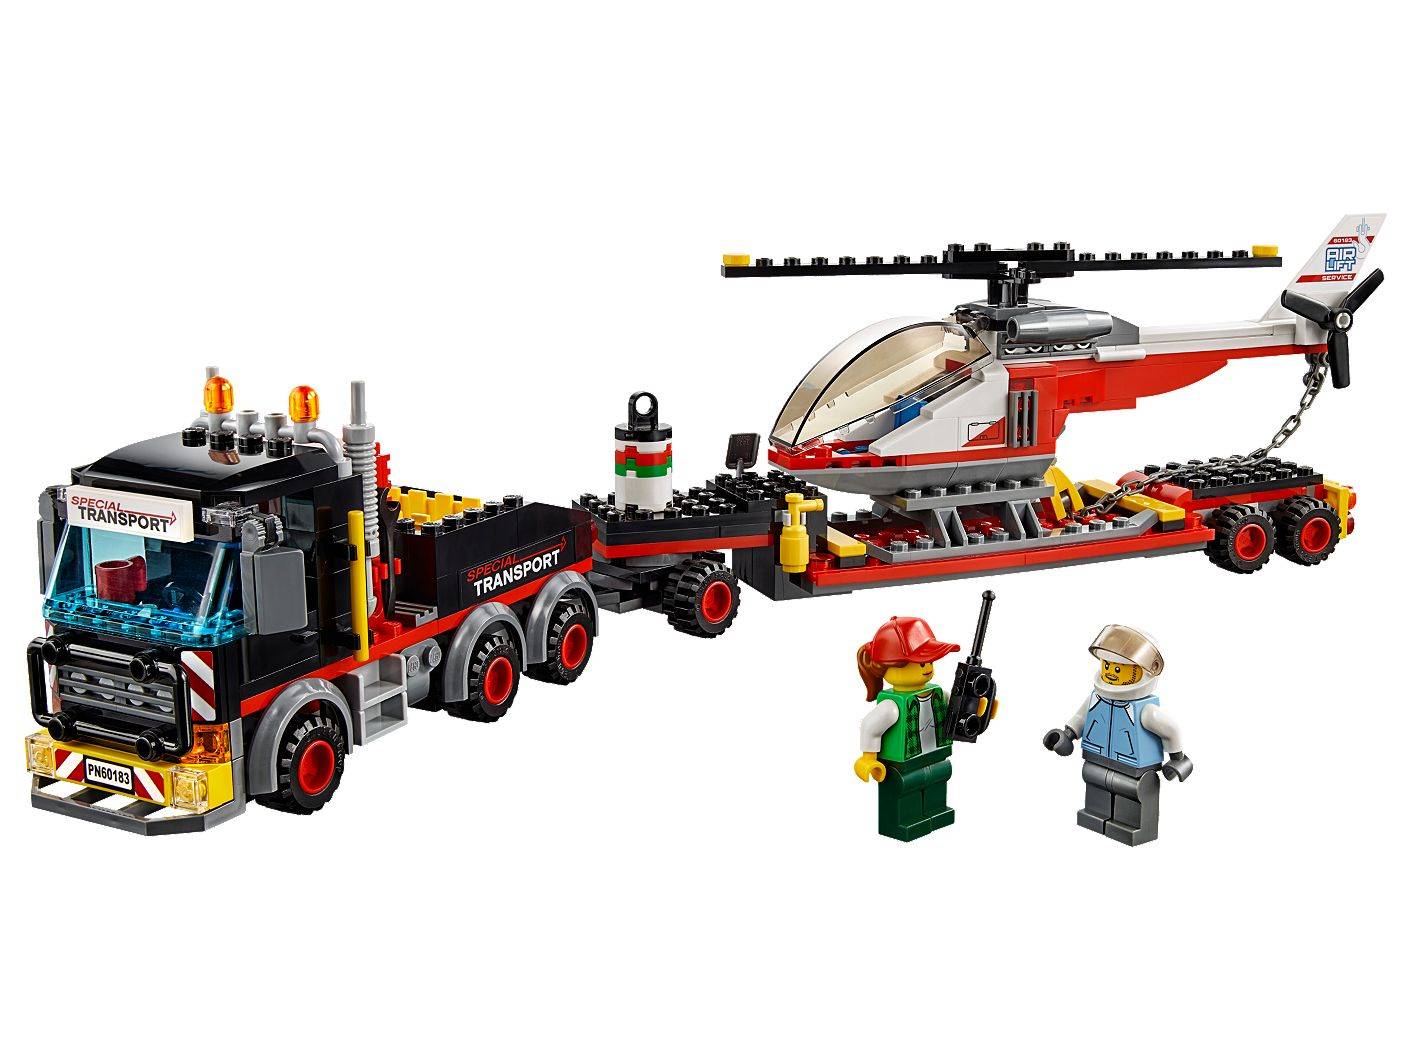 The LEGO City Heavy Transport 60183 